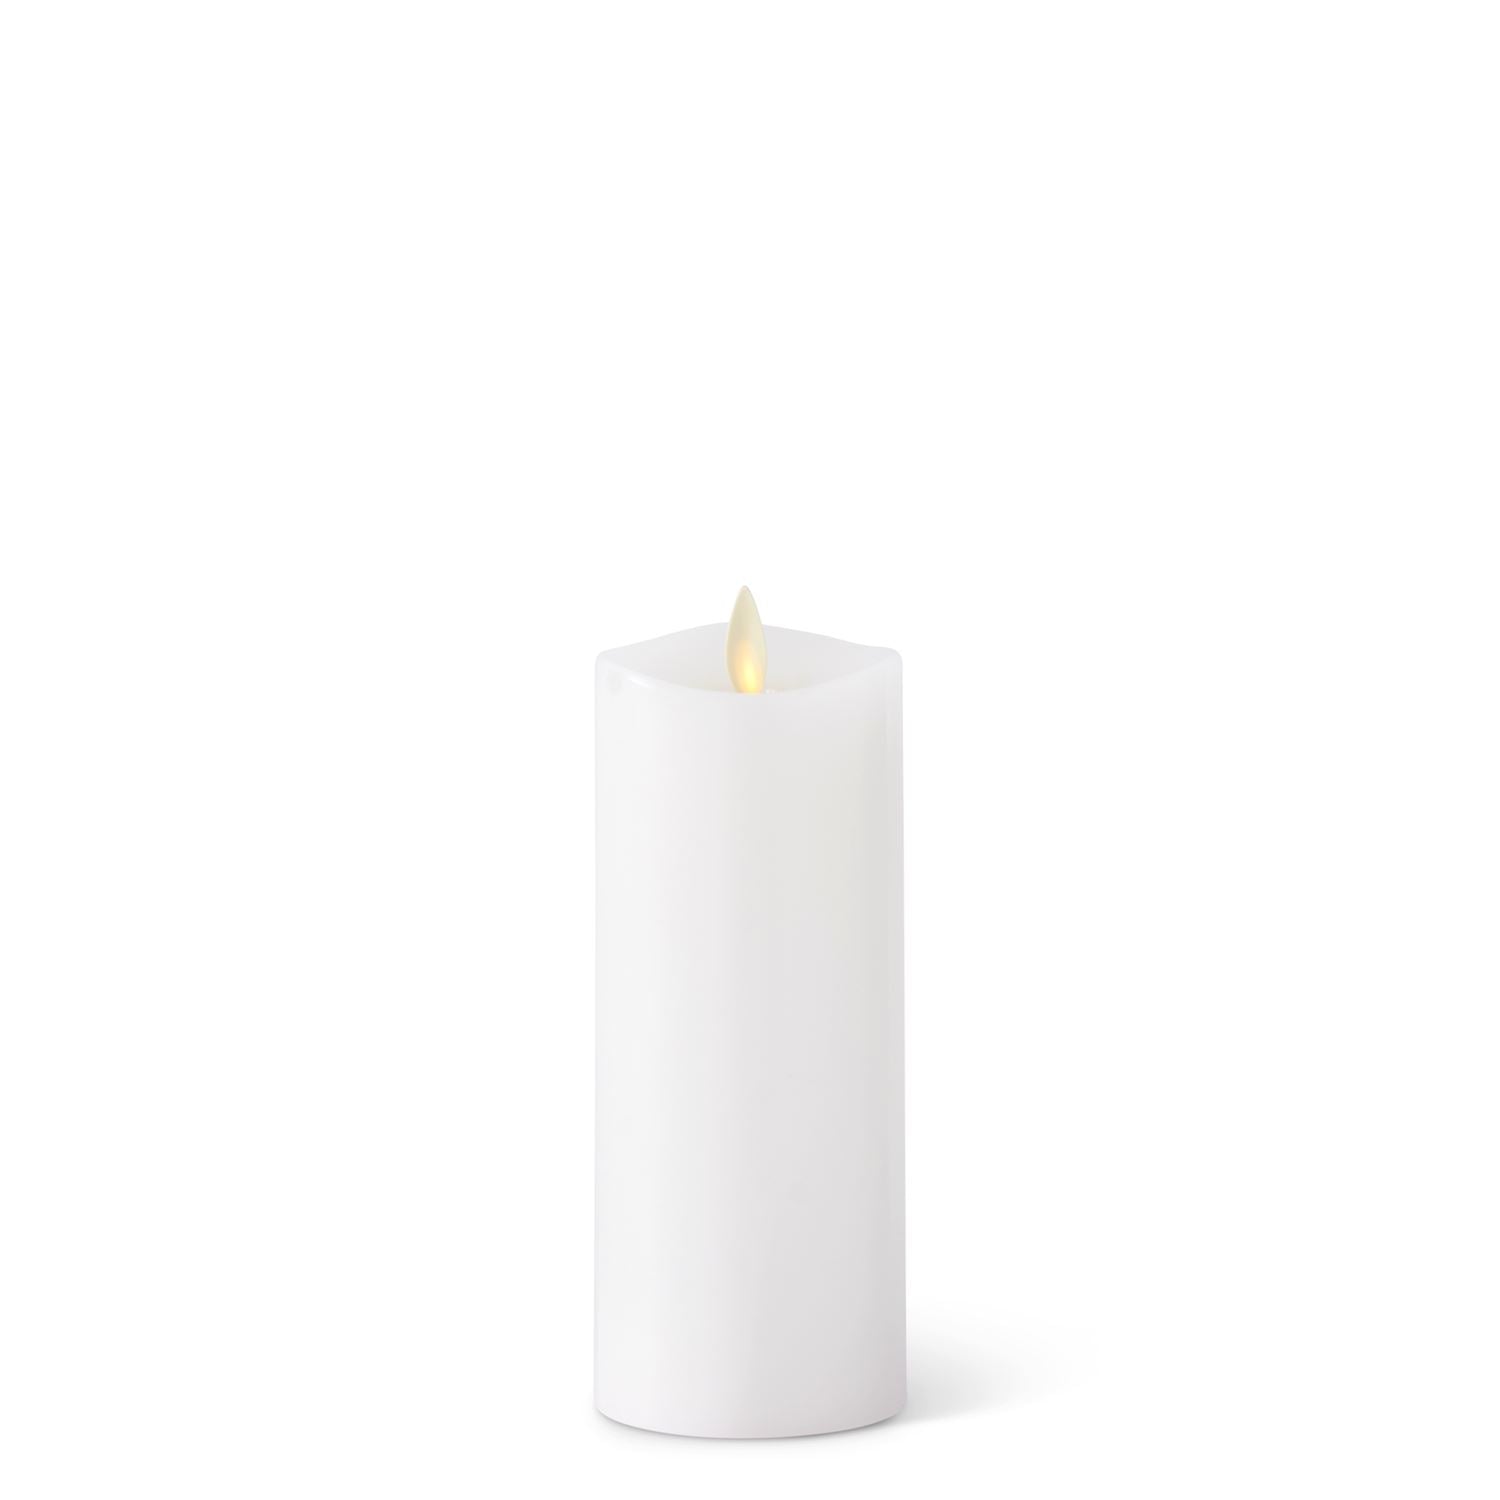 White Wax Slim Indoor Pillar Luminara Real Flame Effect Candle, 6.1 in.H